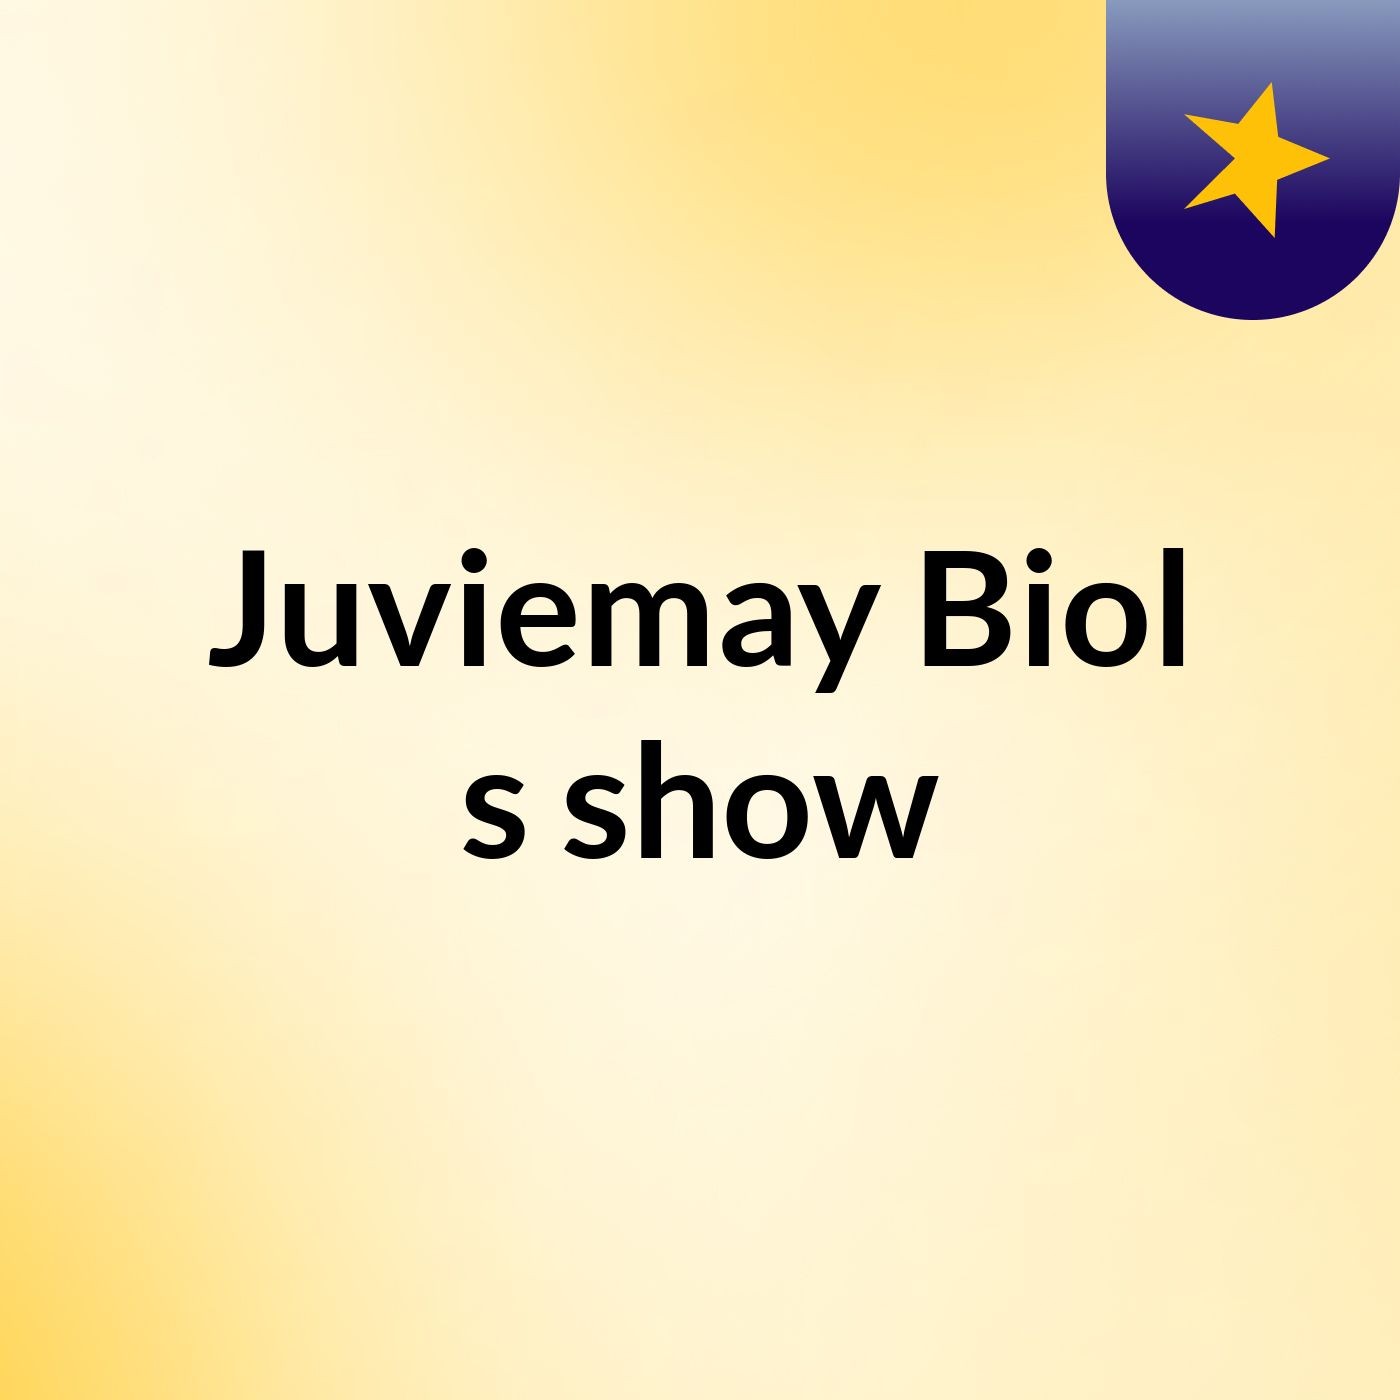 Juviemay Biol's show